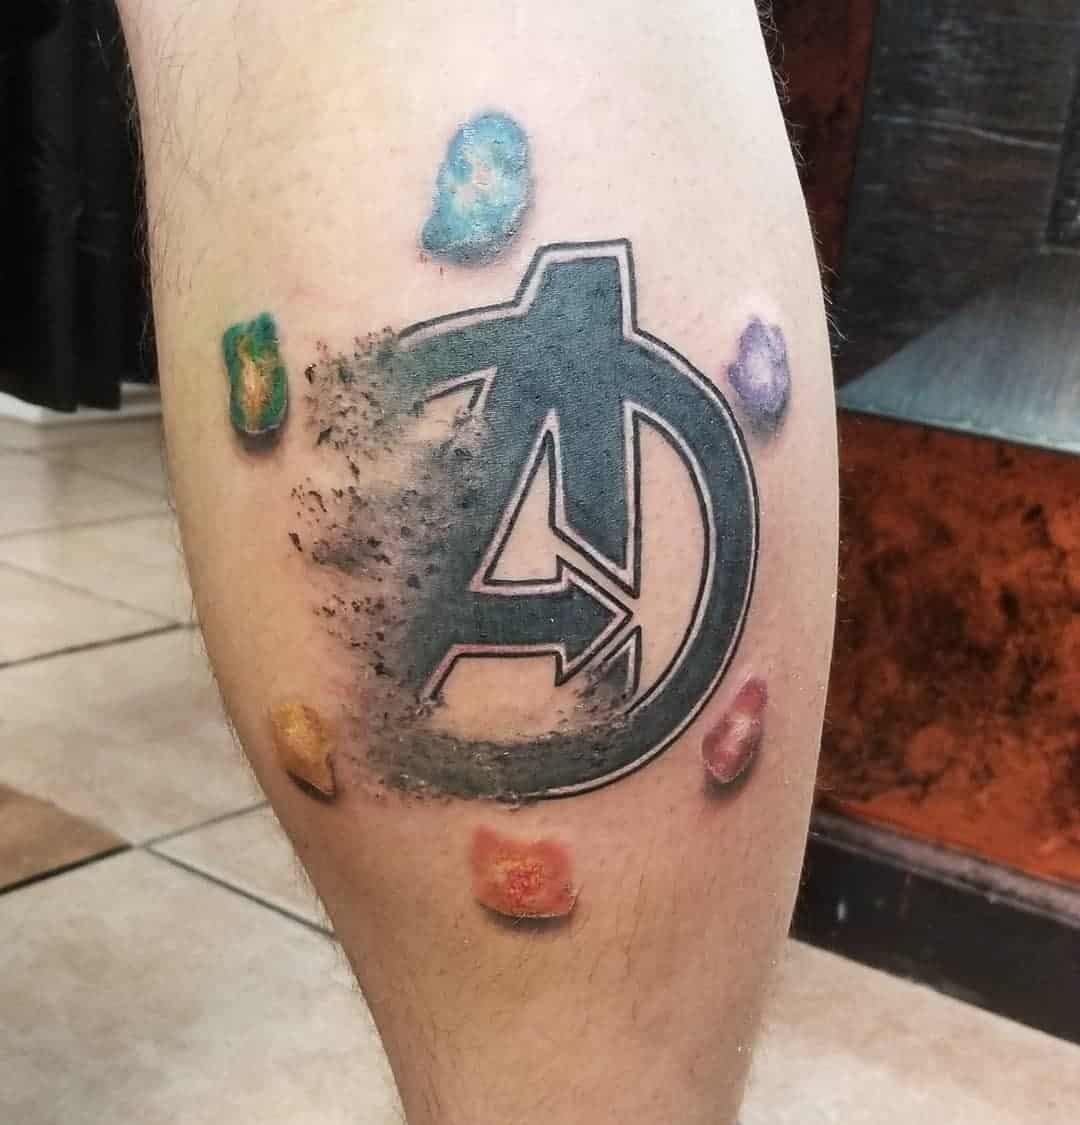 New tattoo! Combining my favorites of Marvel - Avengers and Jessica Jones :  r/marvelstudios